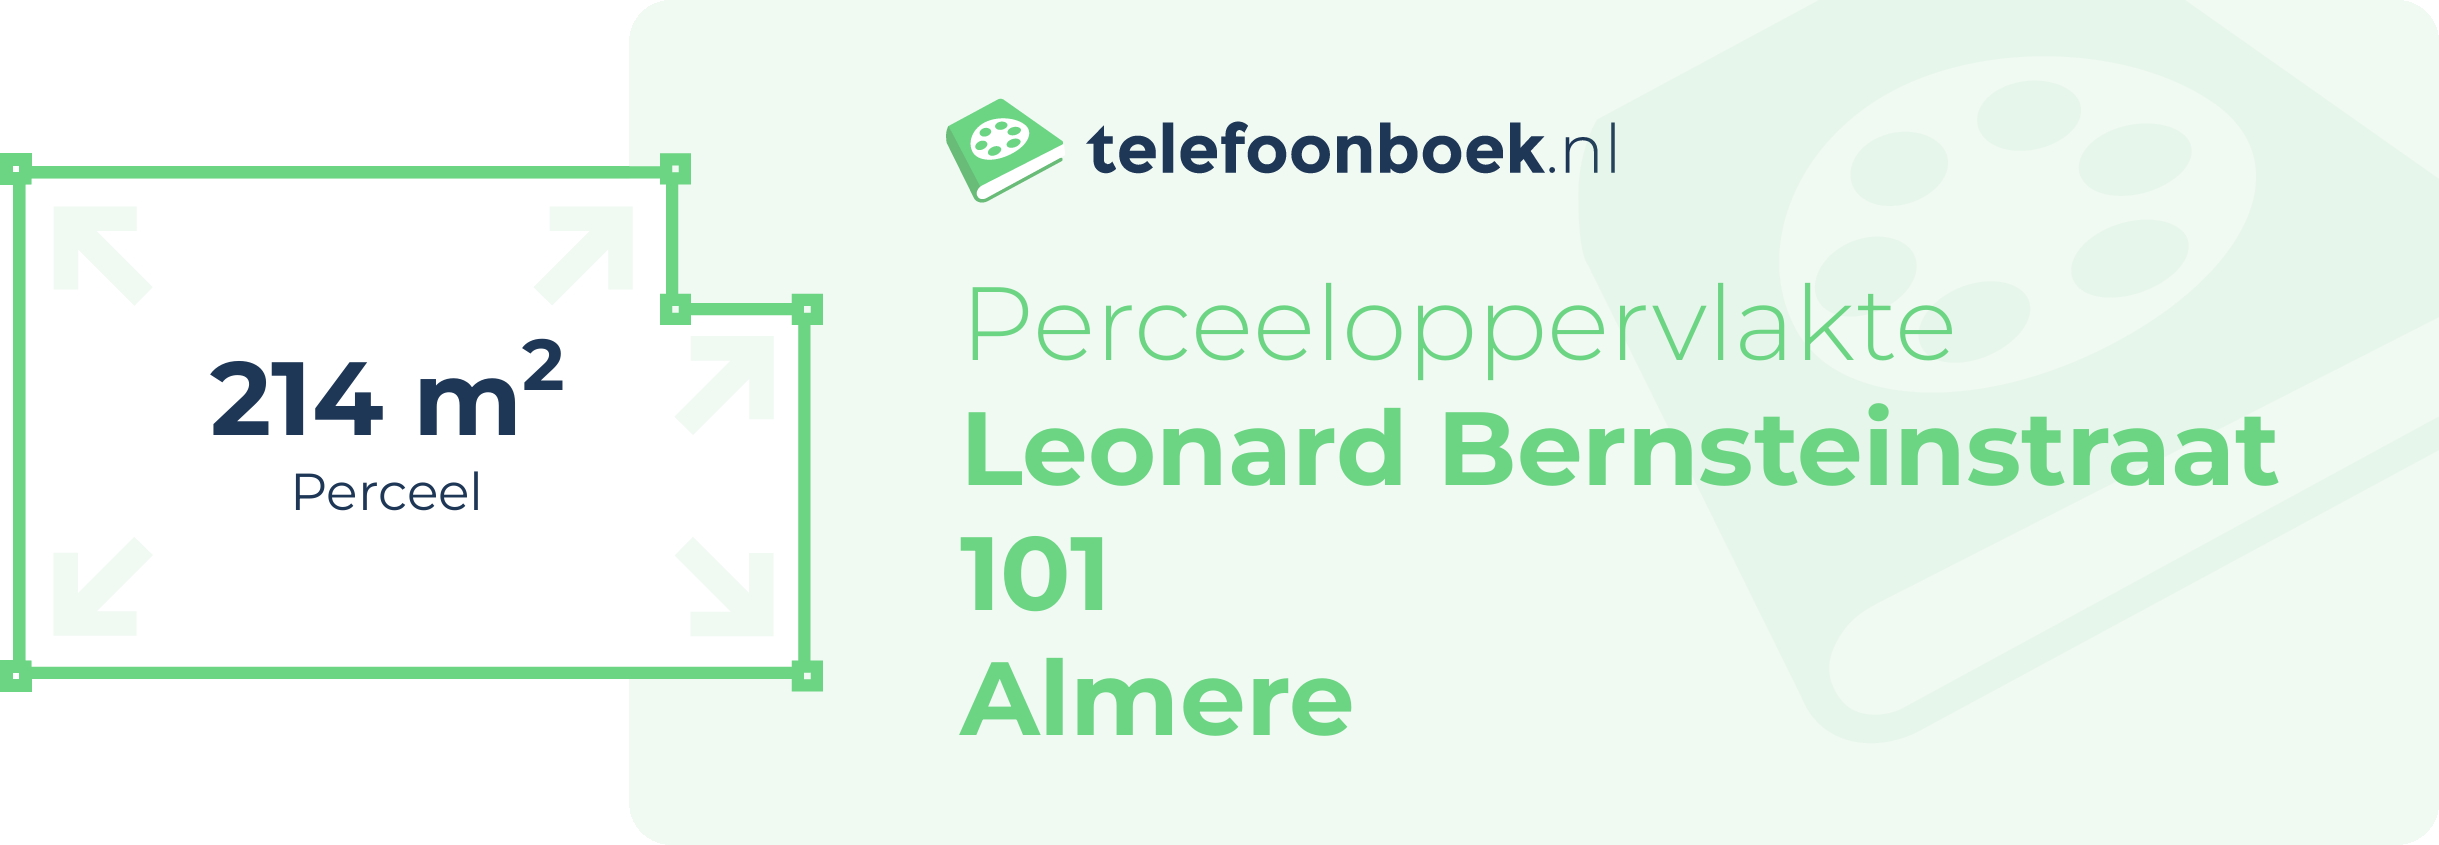 Perceeloppervlakte Leonard Bernsteinstraat 101 Almere